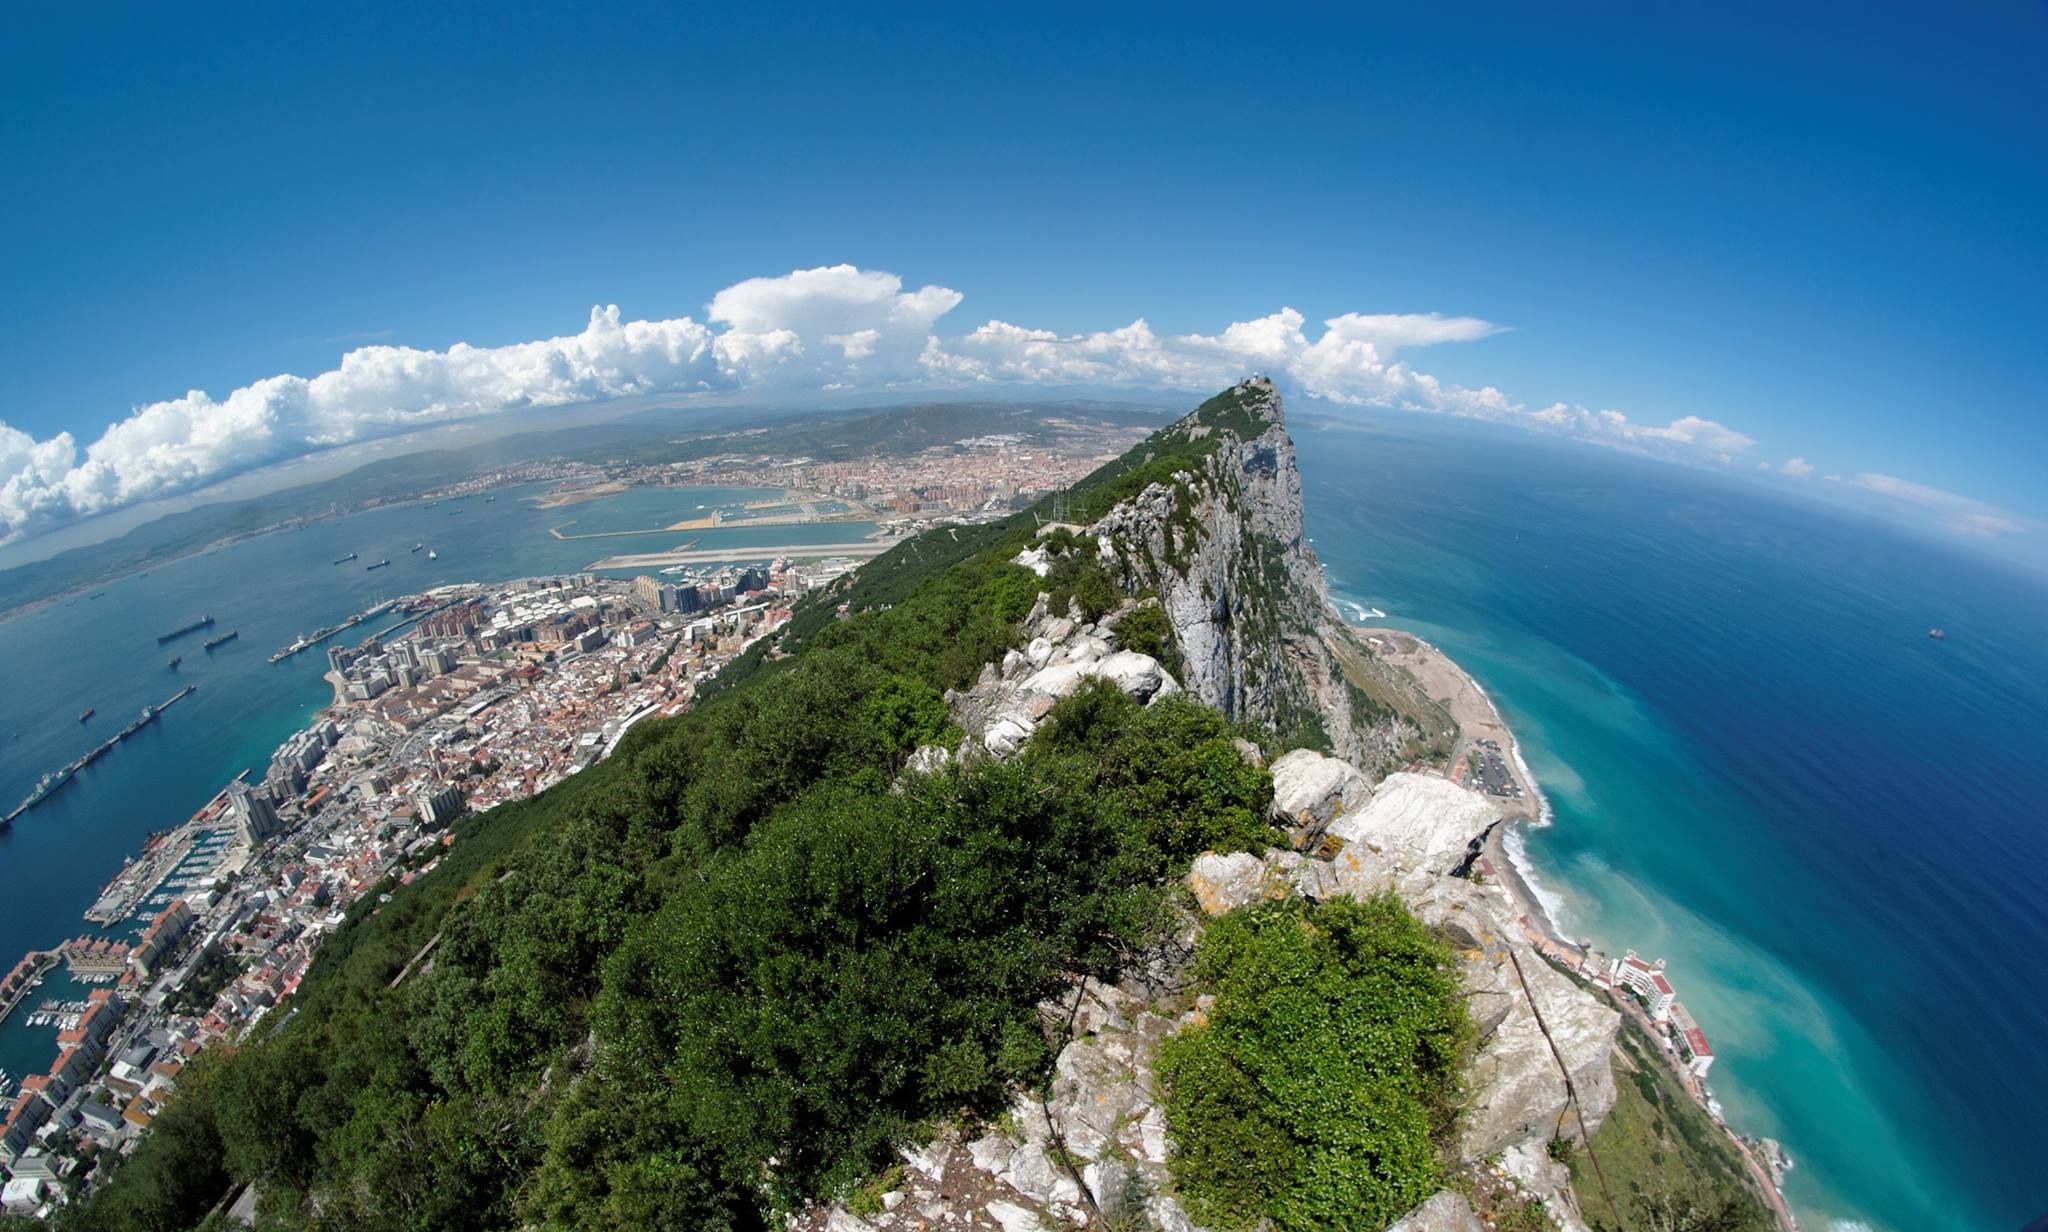 Gibraltar from above - Image credit to Gibraltar Tourism Board.jpg